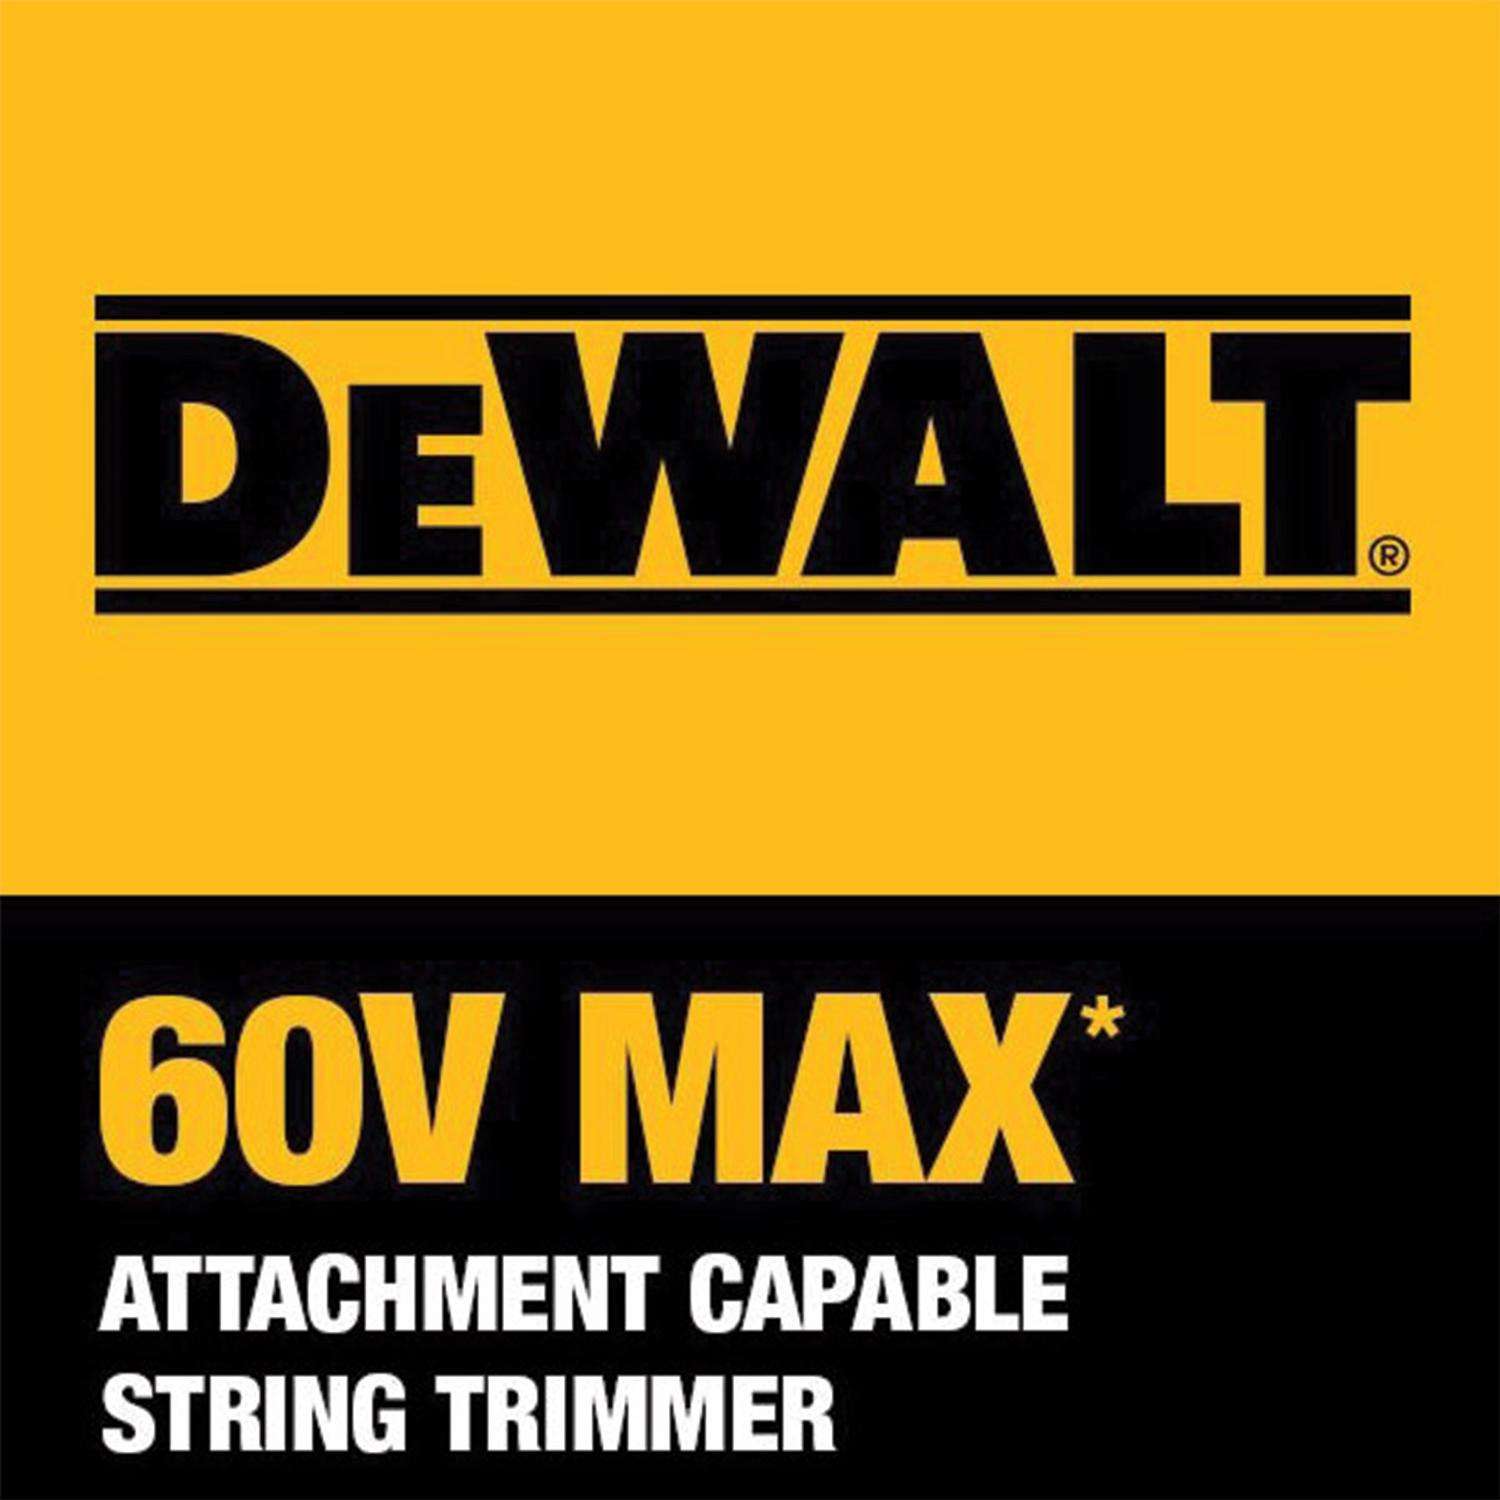 Dewalt 60V Max 17in Brushless Attachment Capable String Trimmer